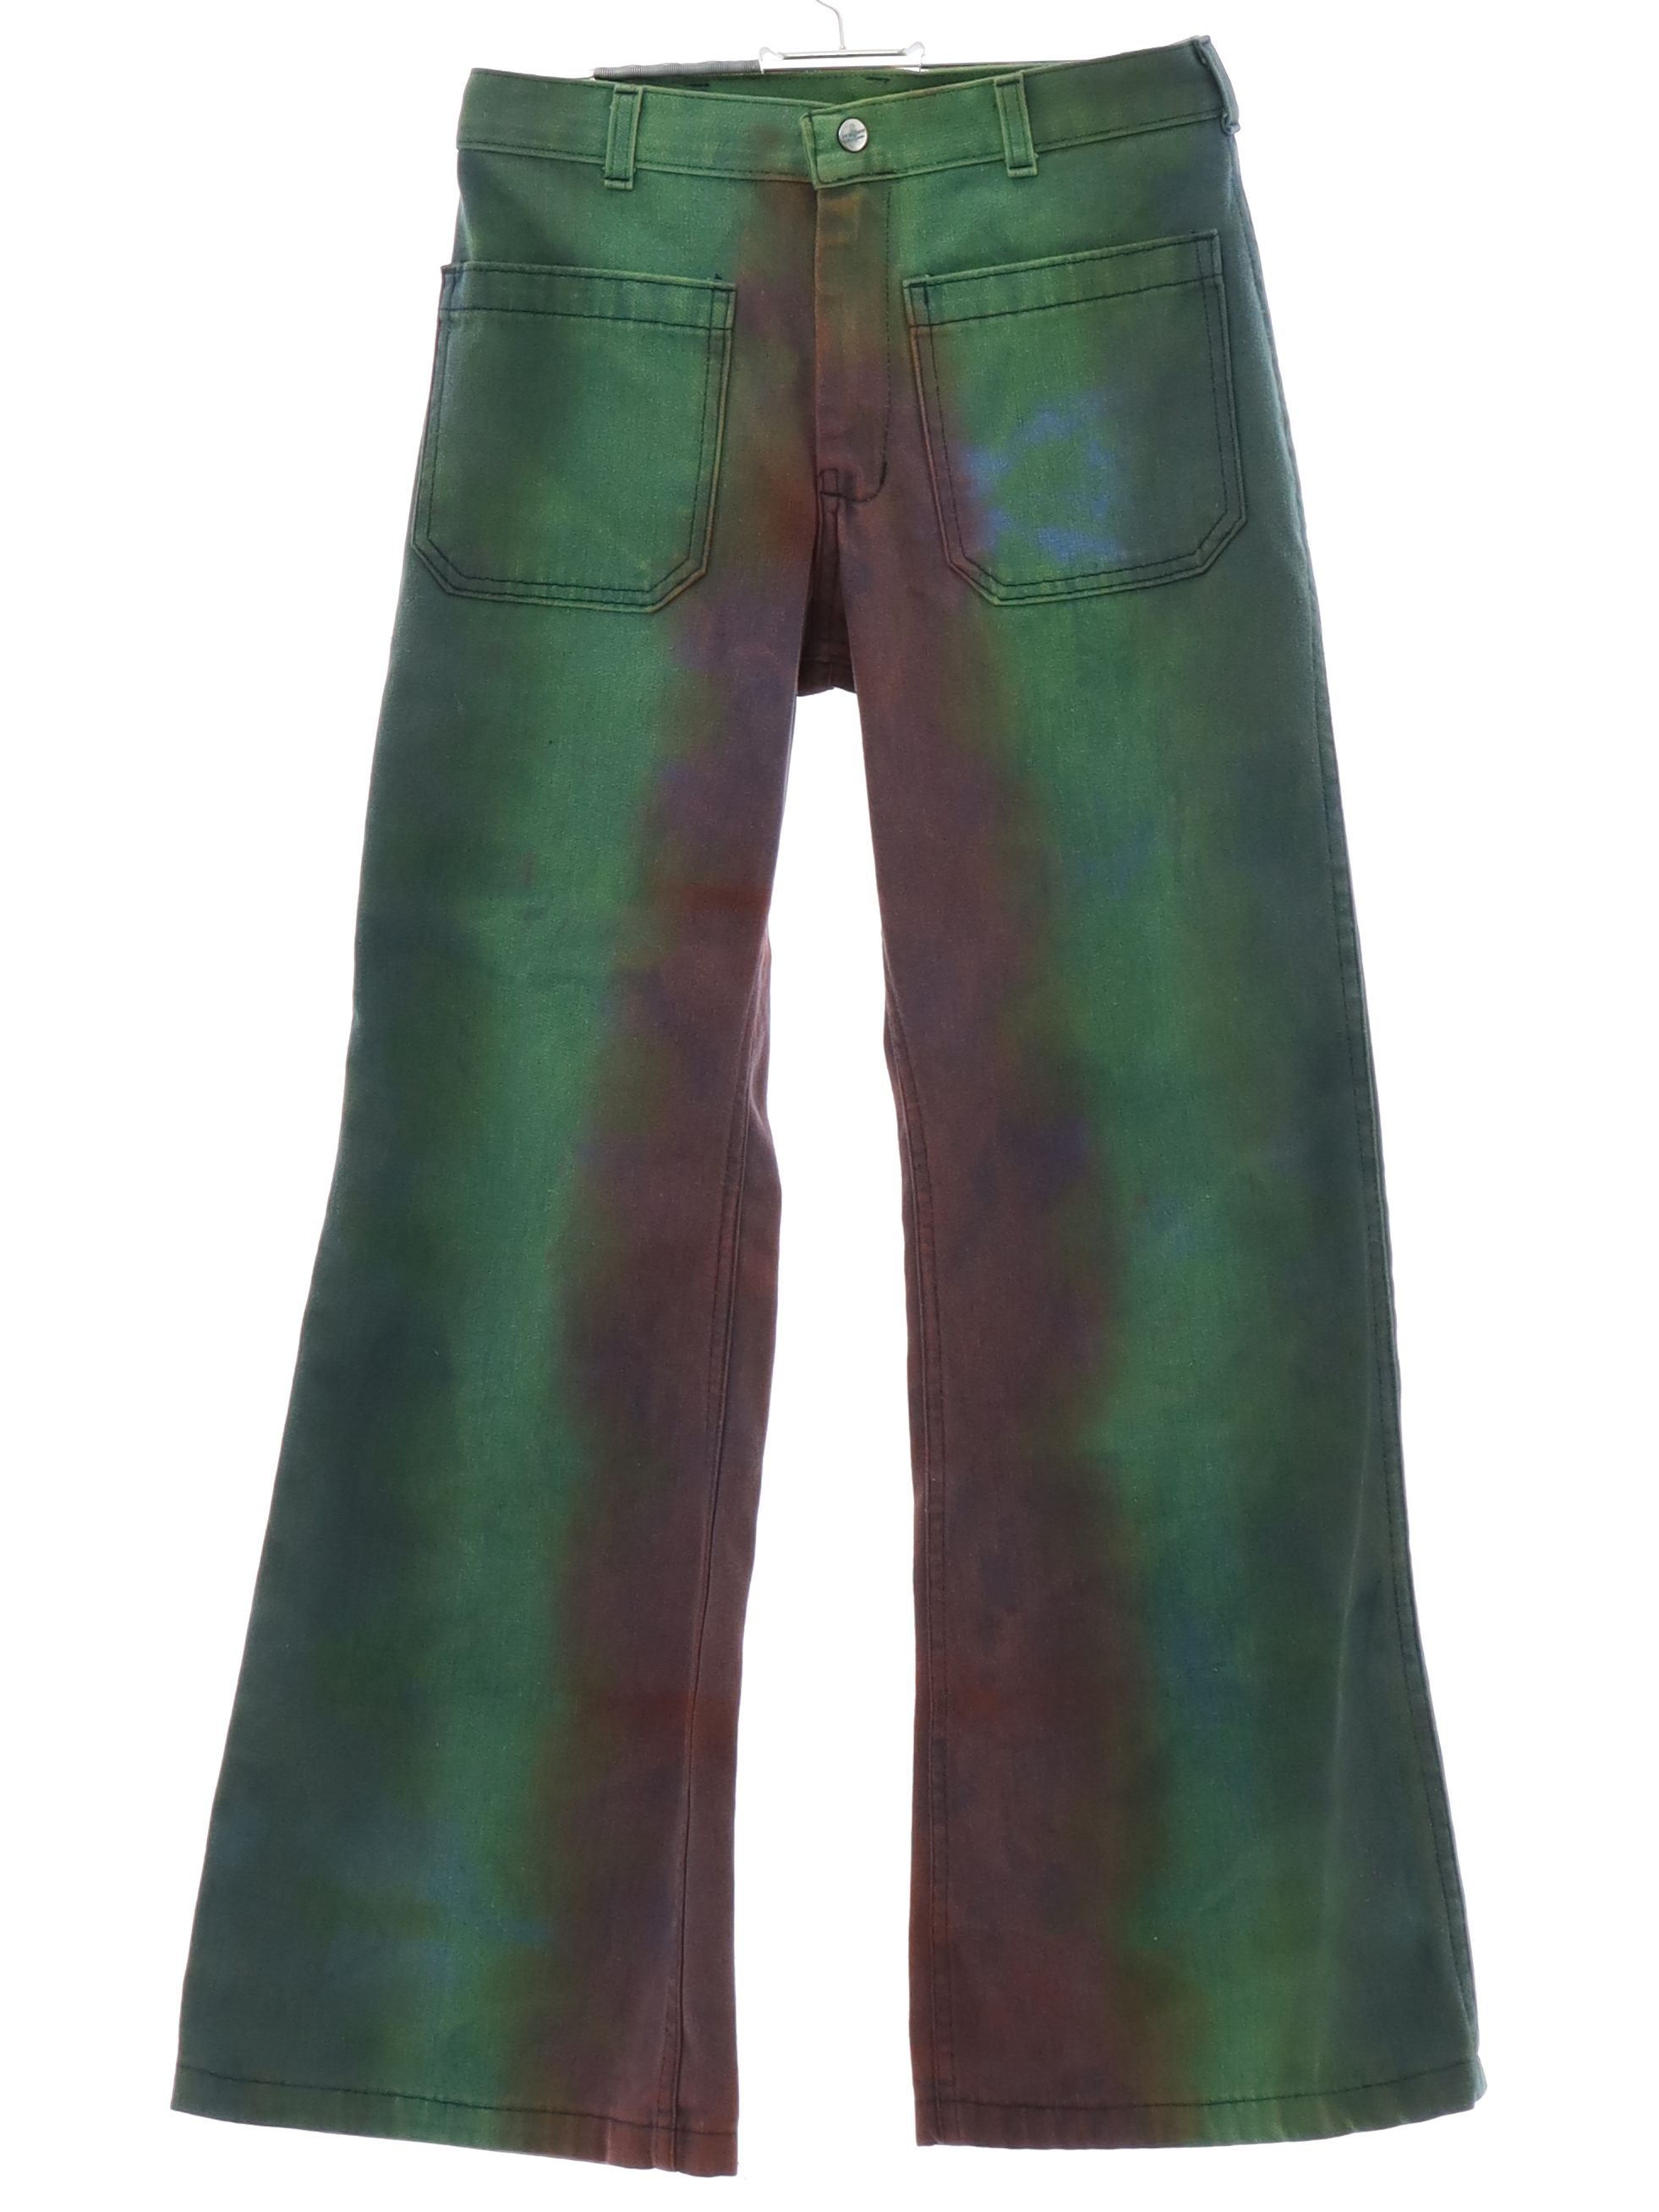 1970s Seafarer Bellbottom Pants: 70s style -Seafarer- Unisex shades of ...